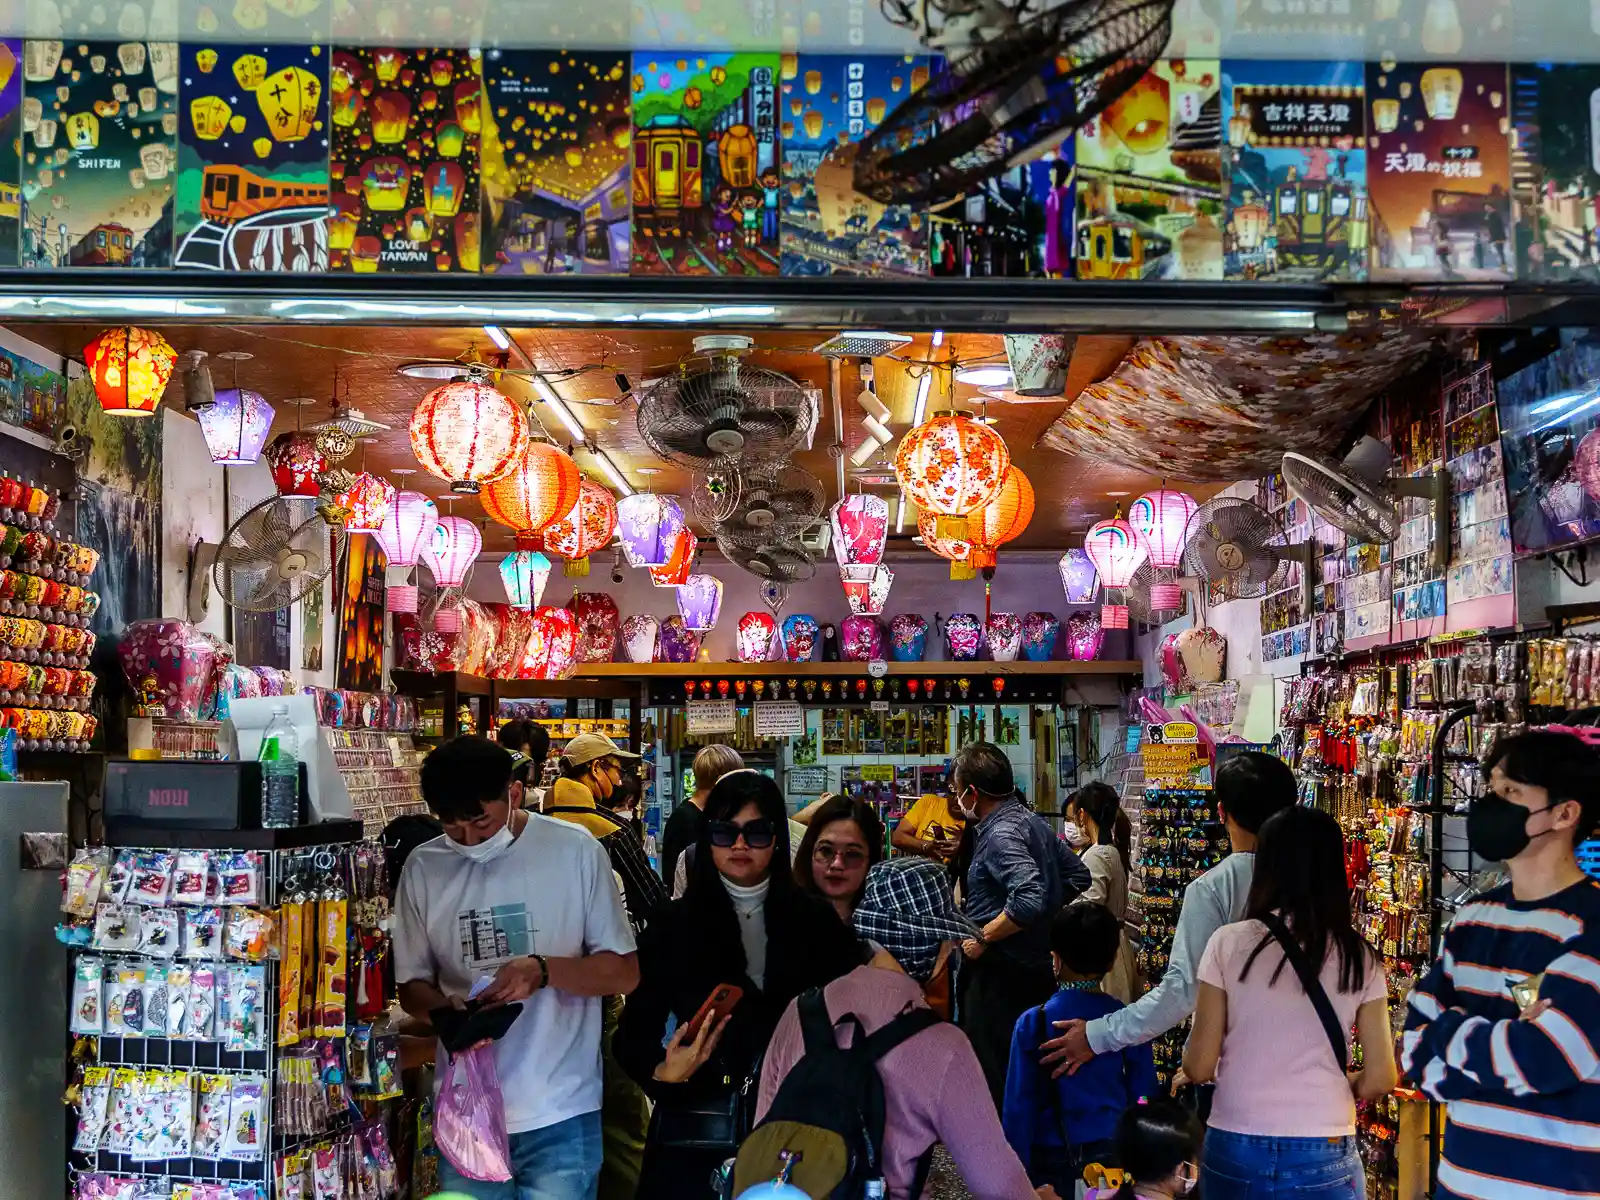 A busy souvenir shop sells lanterns and trinkets.